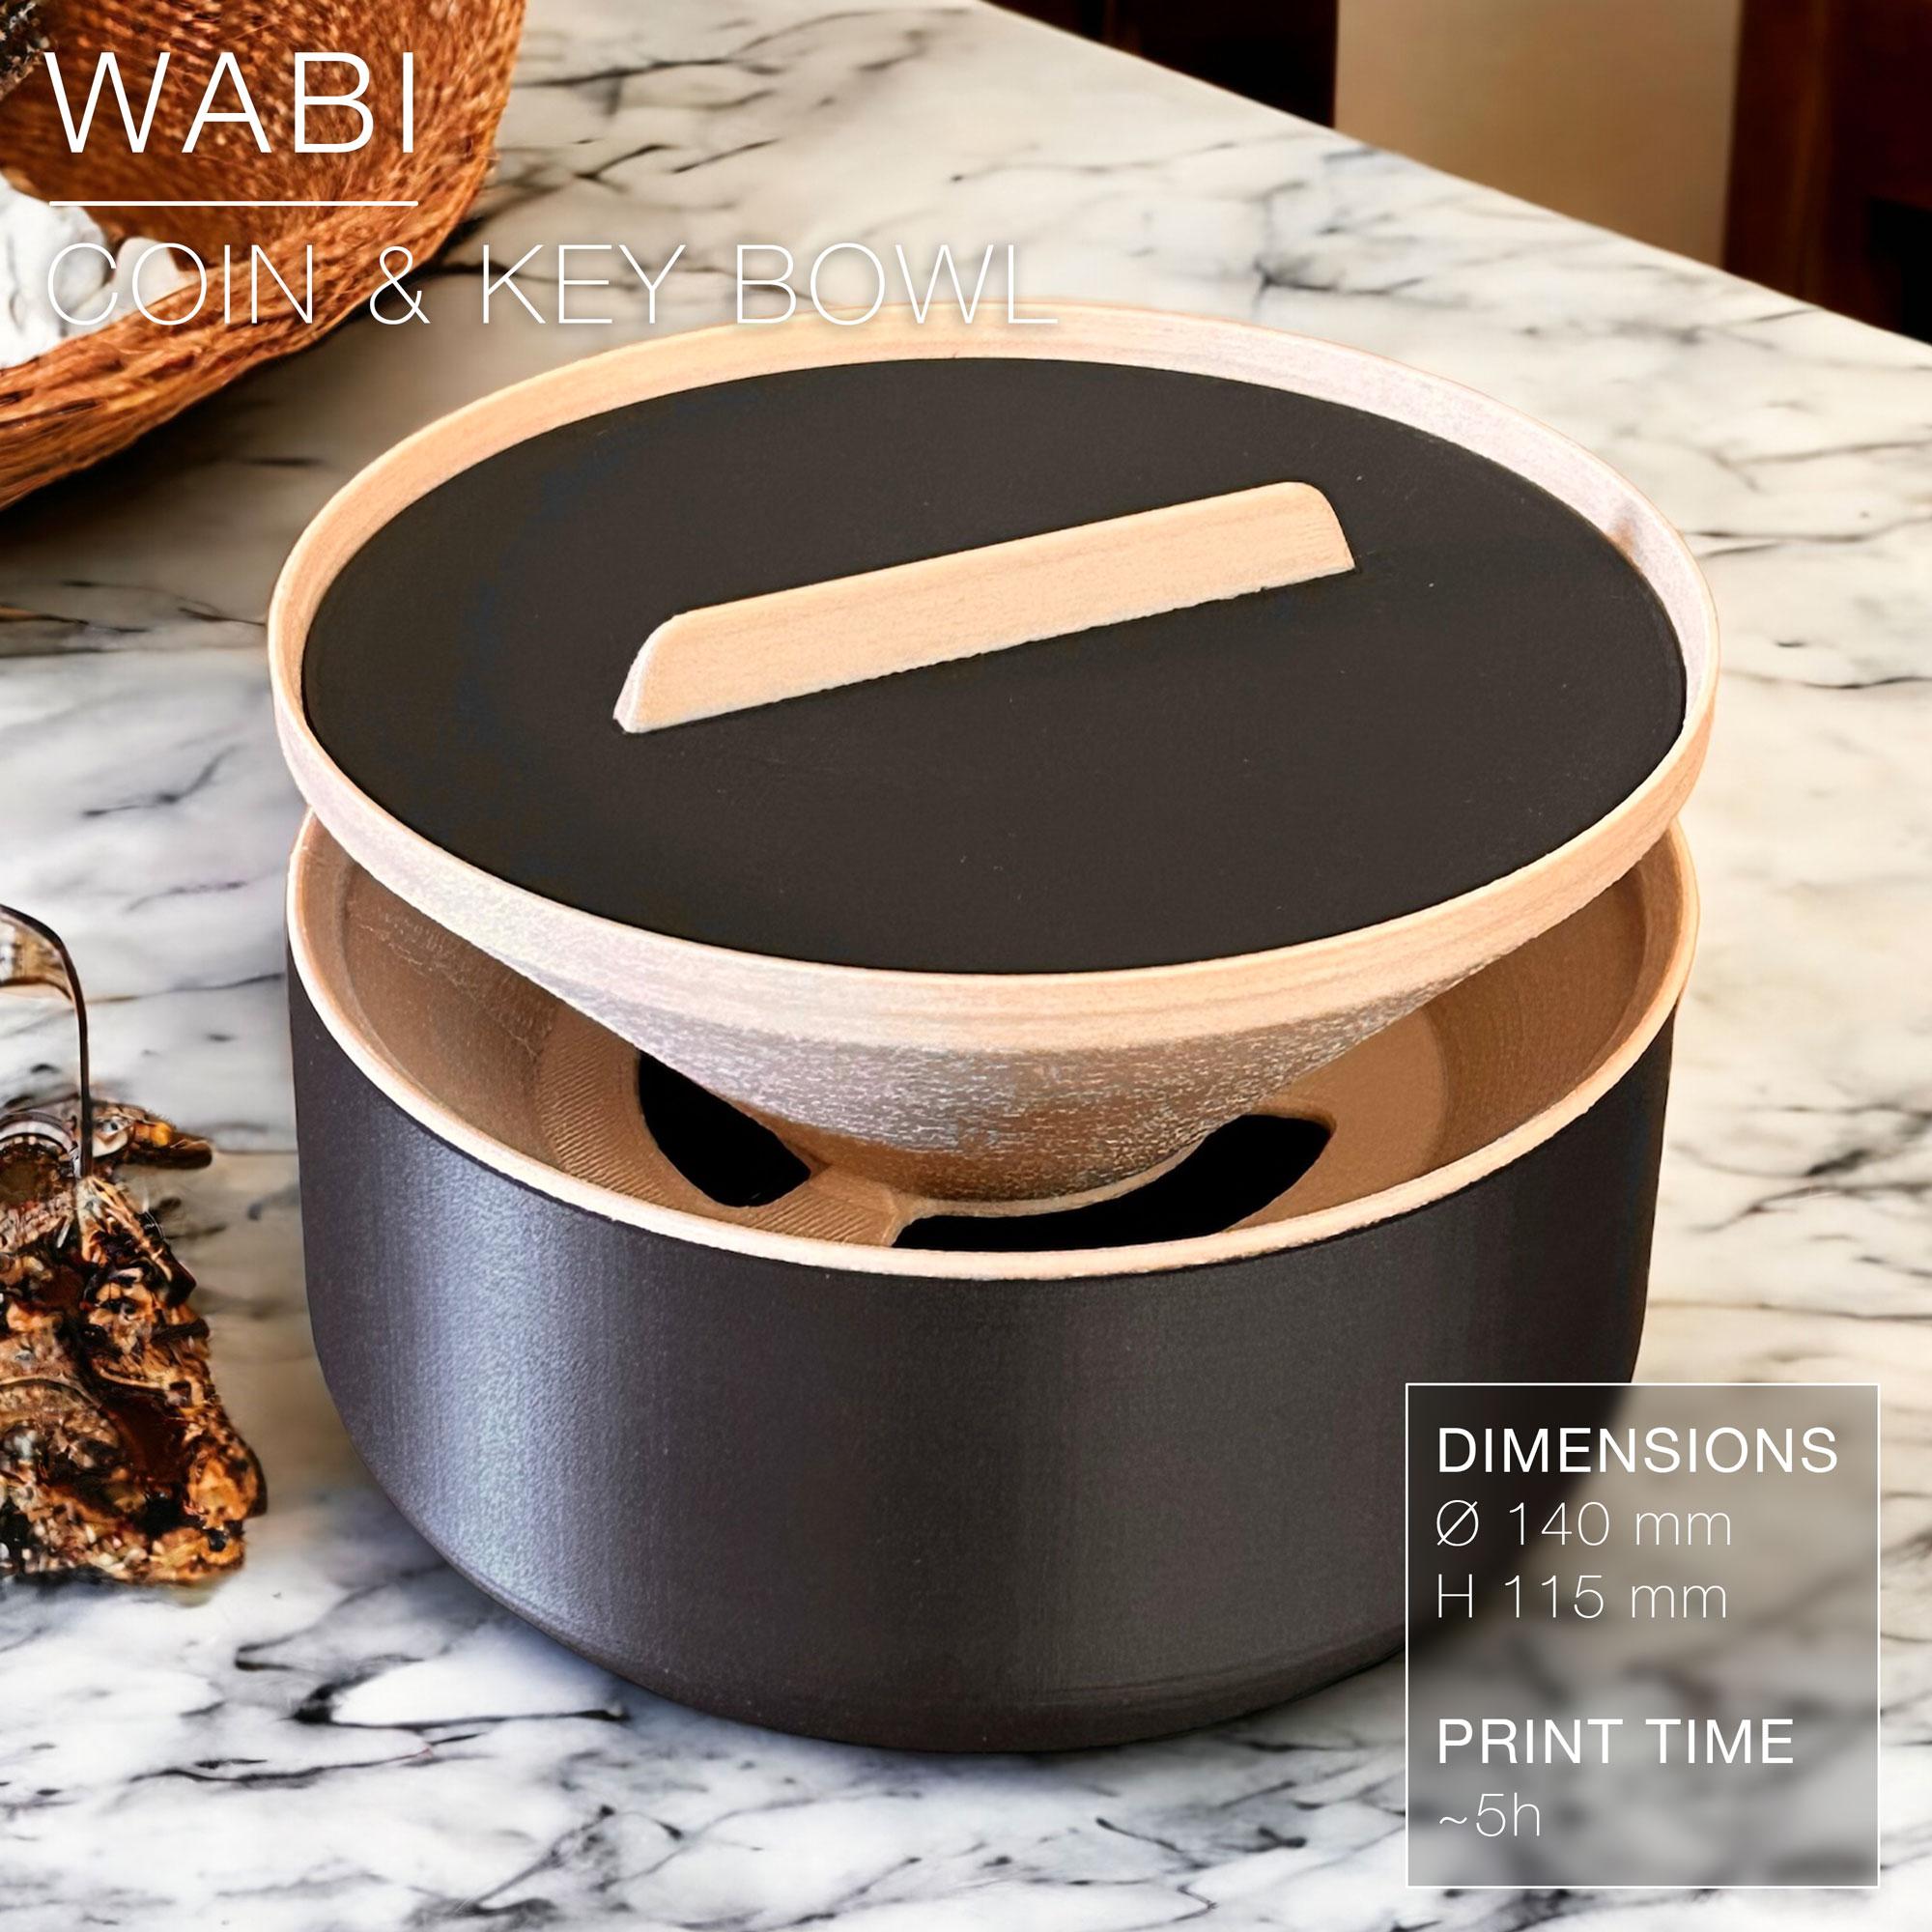 WABI | Coin & key bowl 3d model